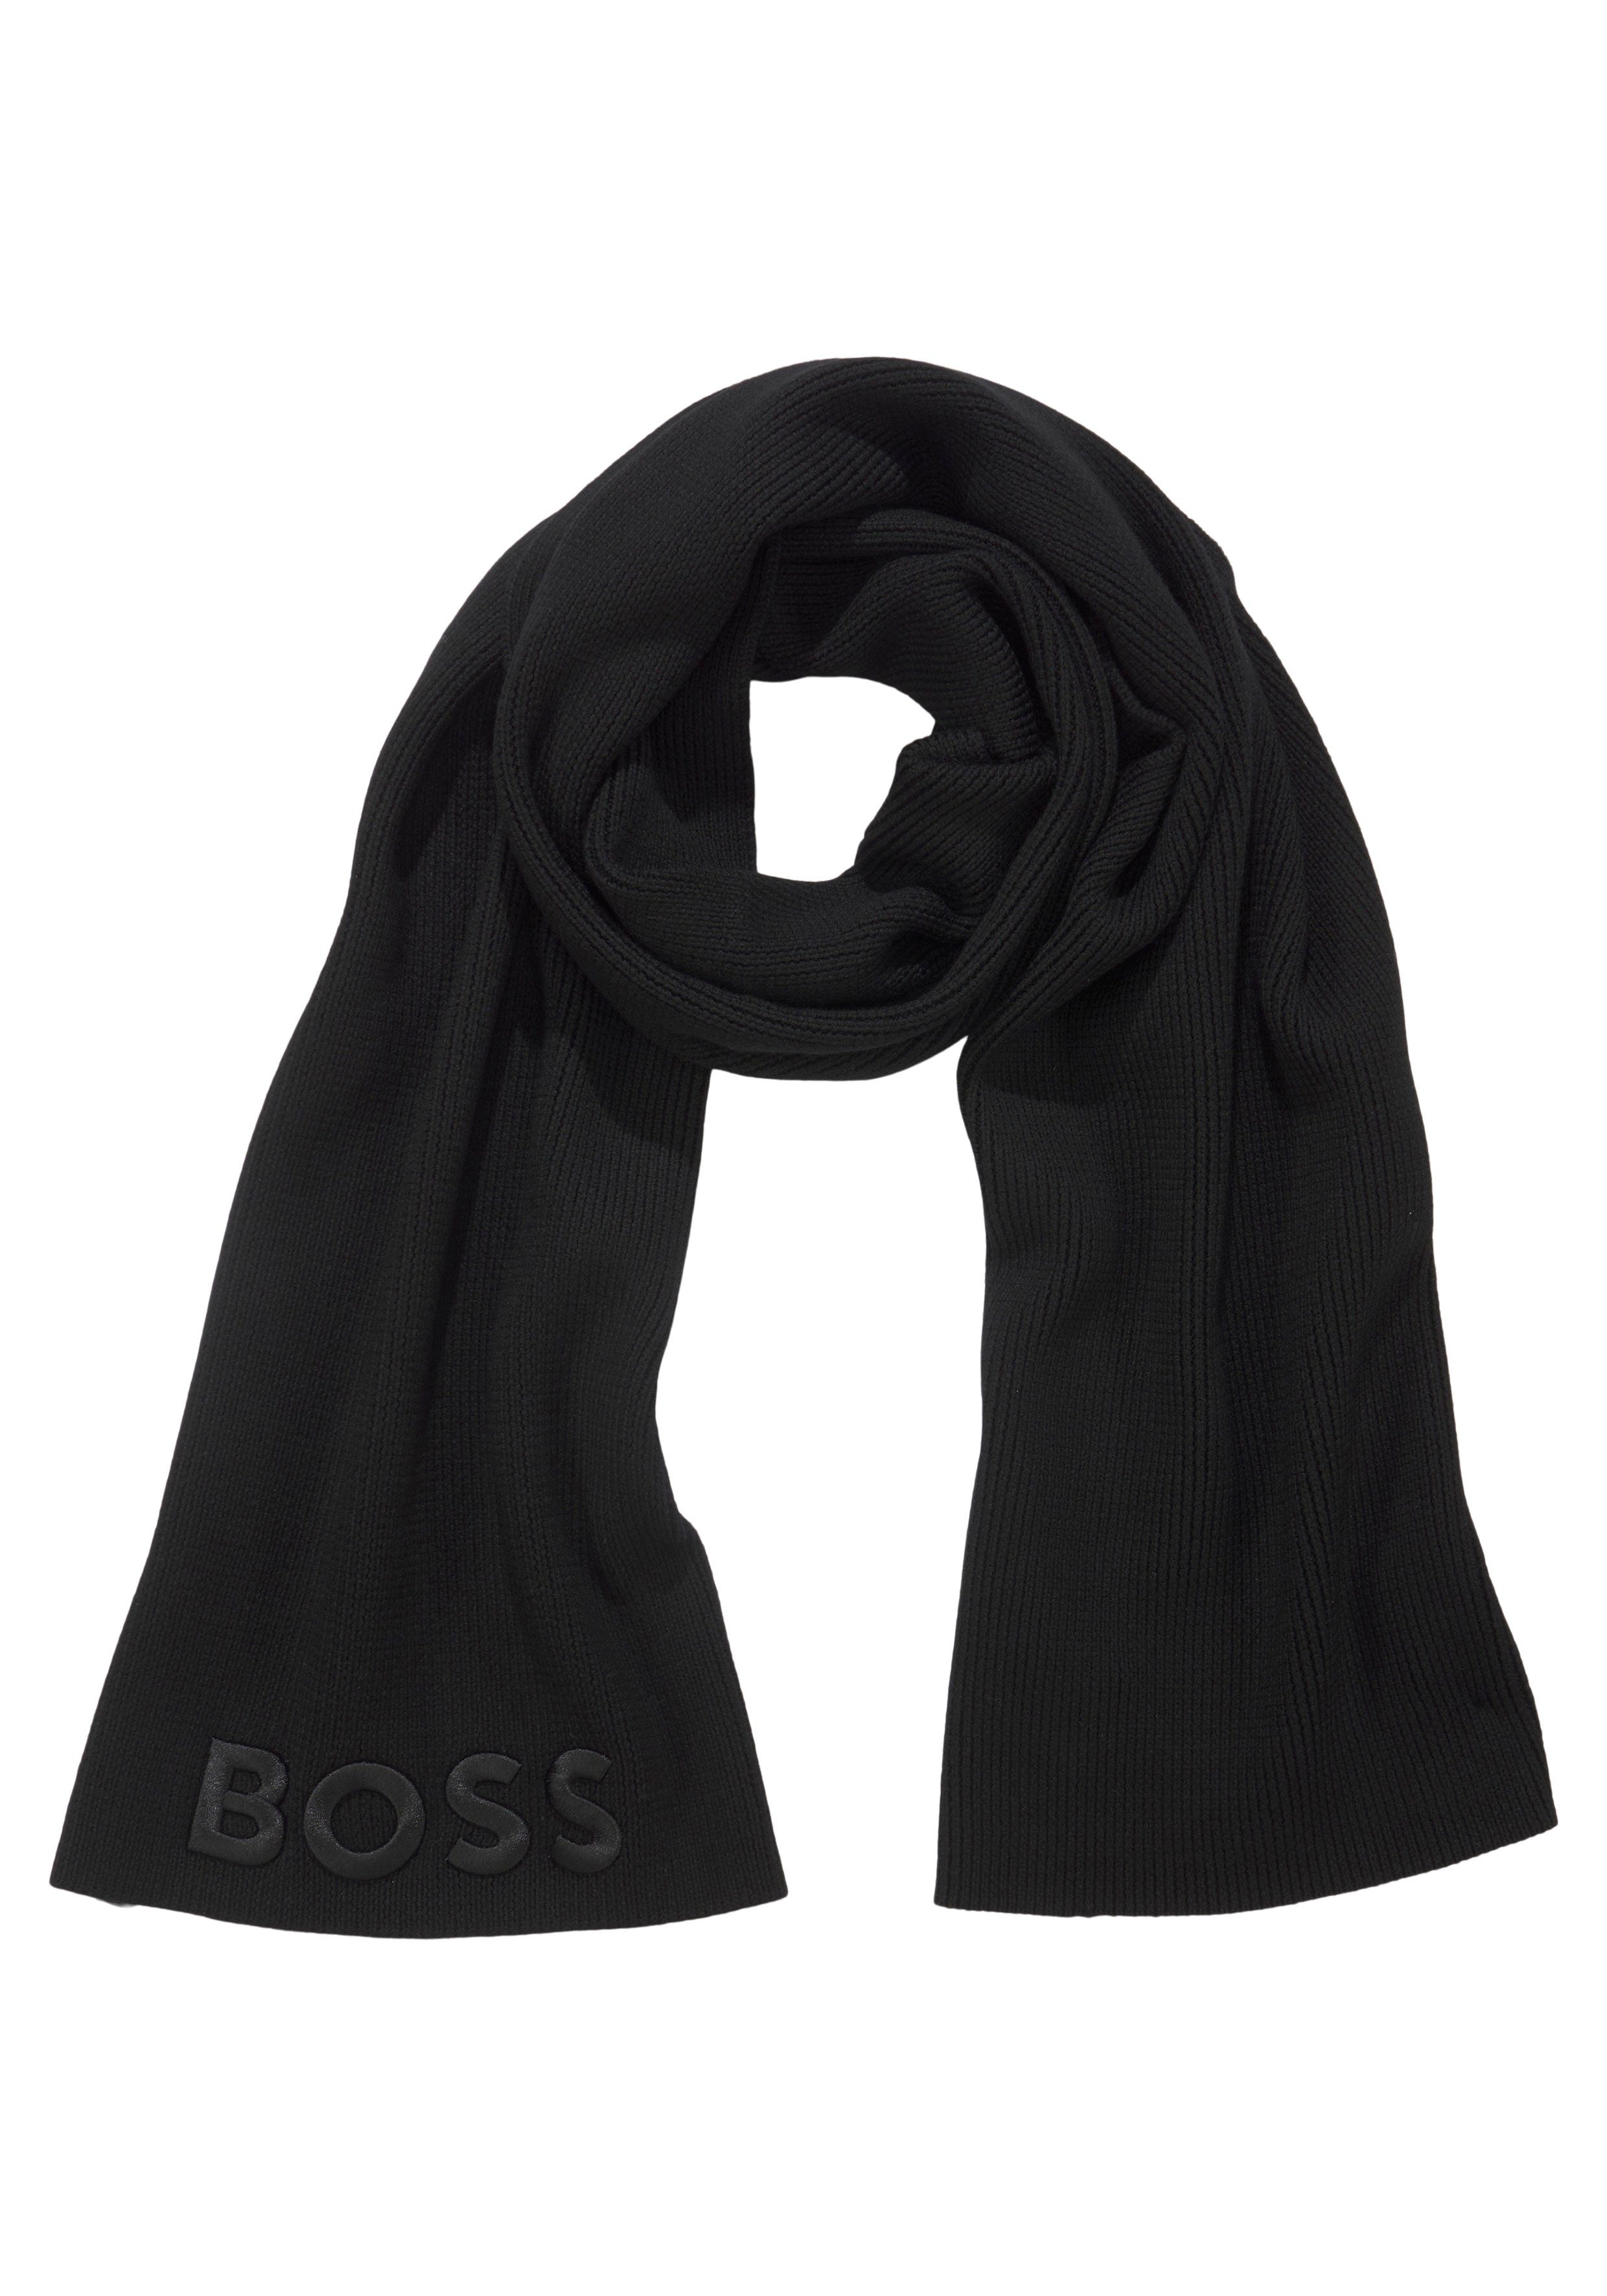 BOSS Schal Lara_scarf, mit Boss Womanswear Logo-Stickerei, tonaler Black Schal von BOSS